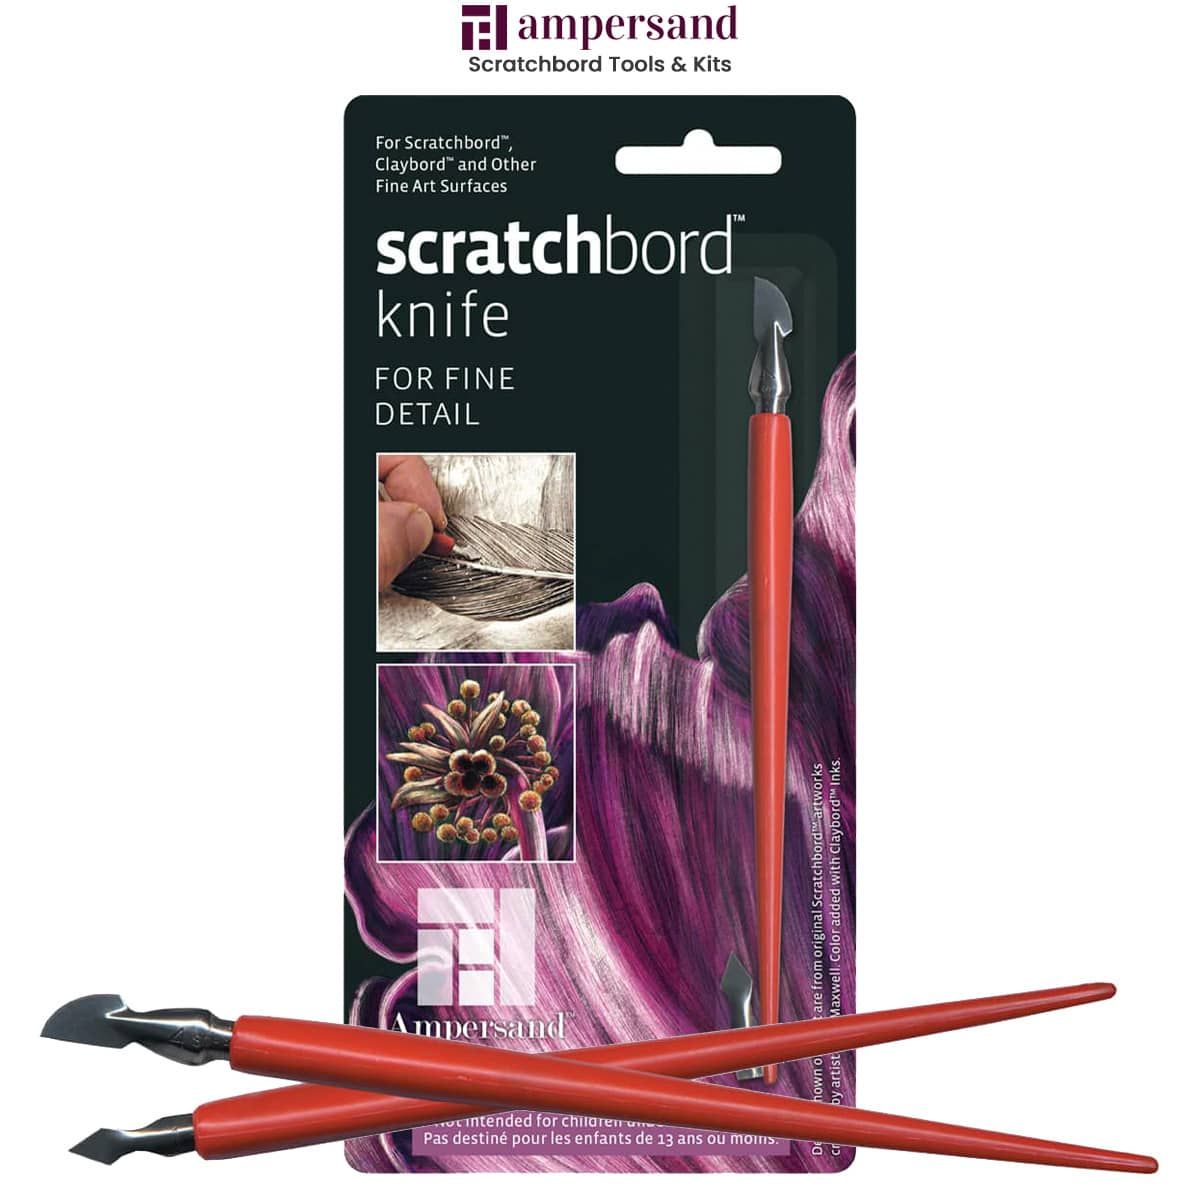 Ampersand Scratchbord Tools & Kits